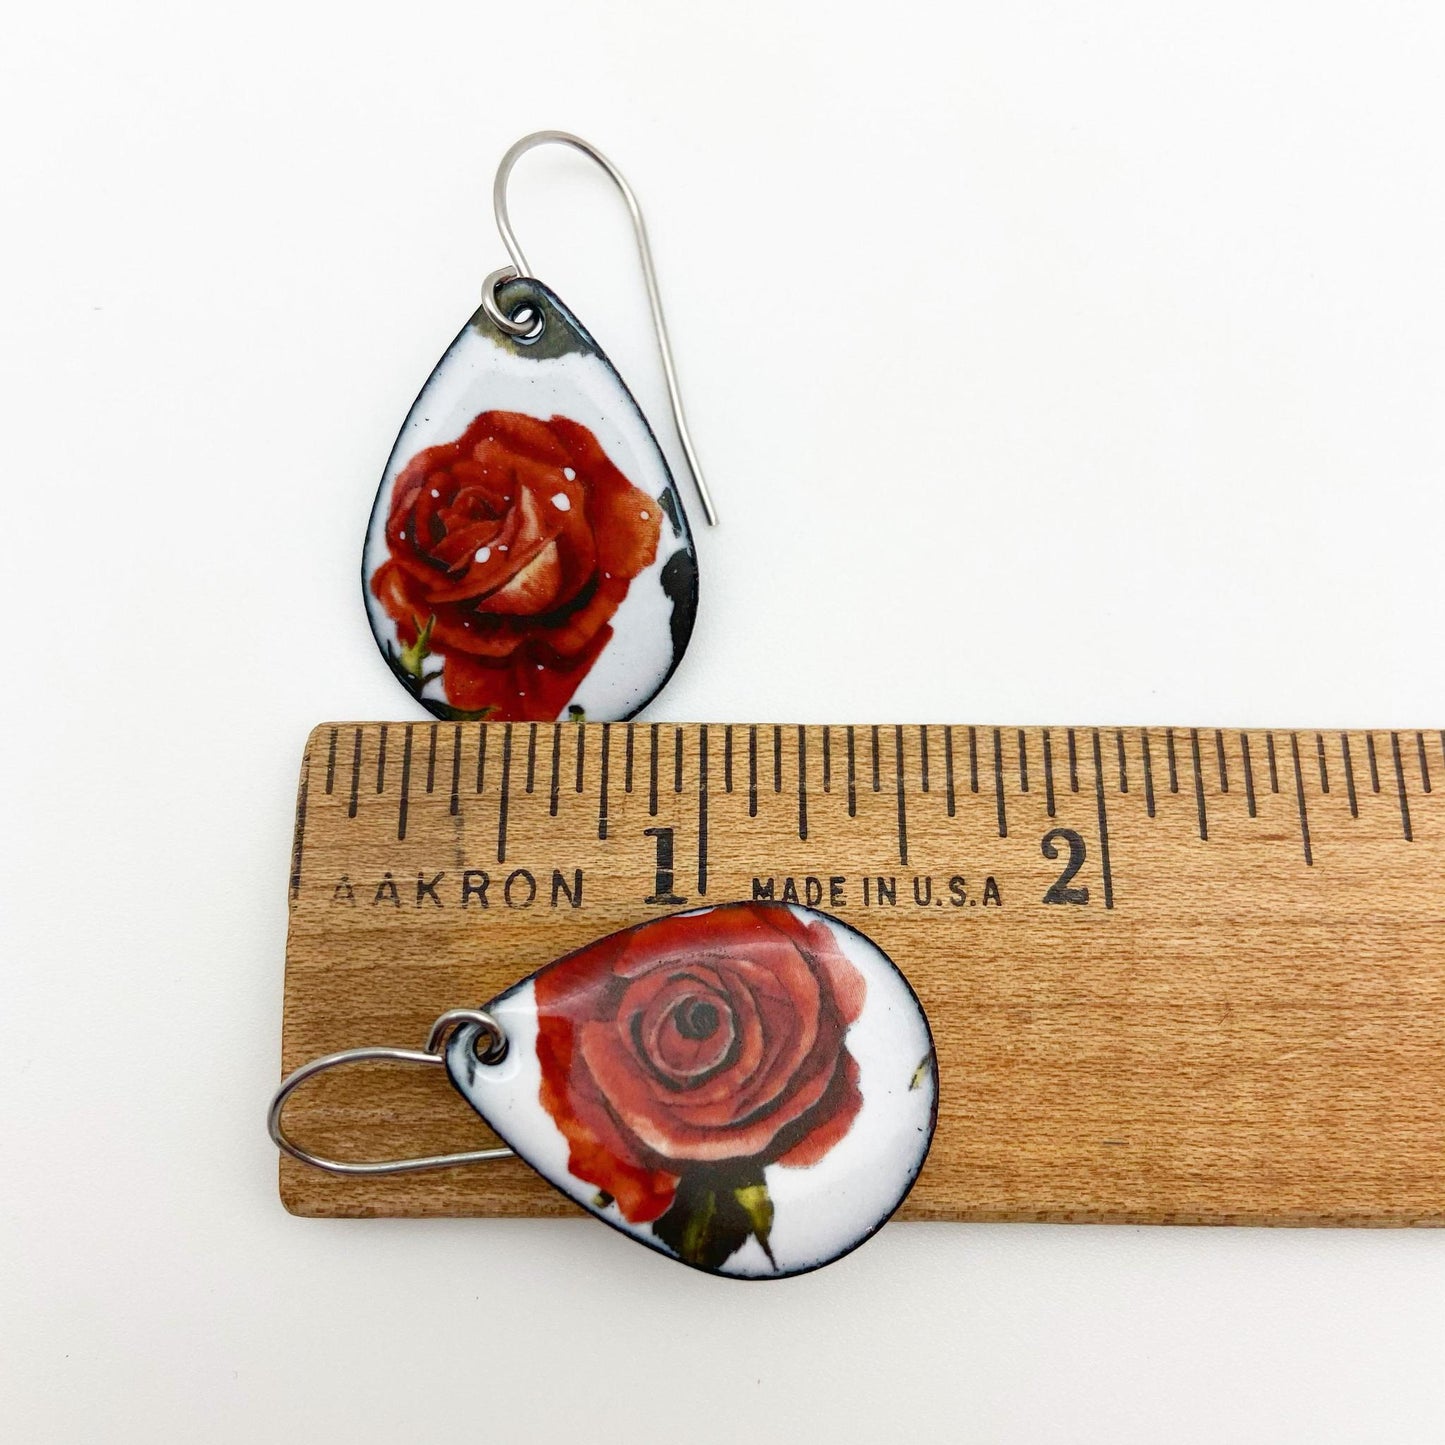 Earrings - Roses on Teardrops - Enamel Originals